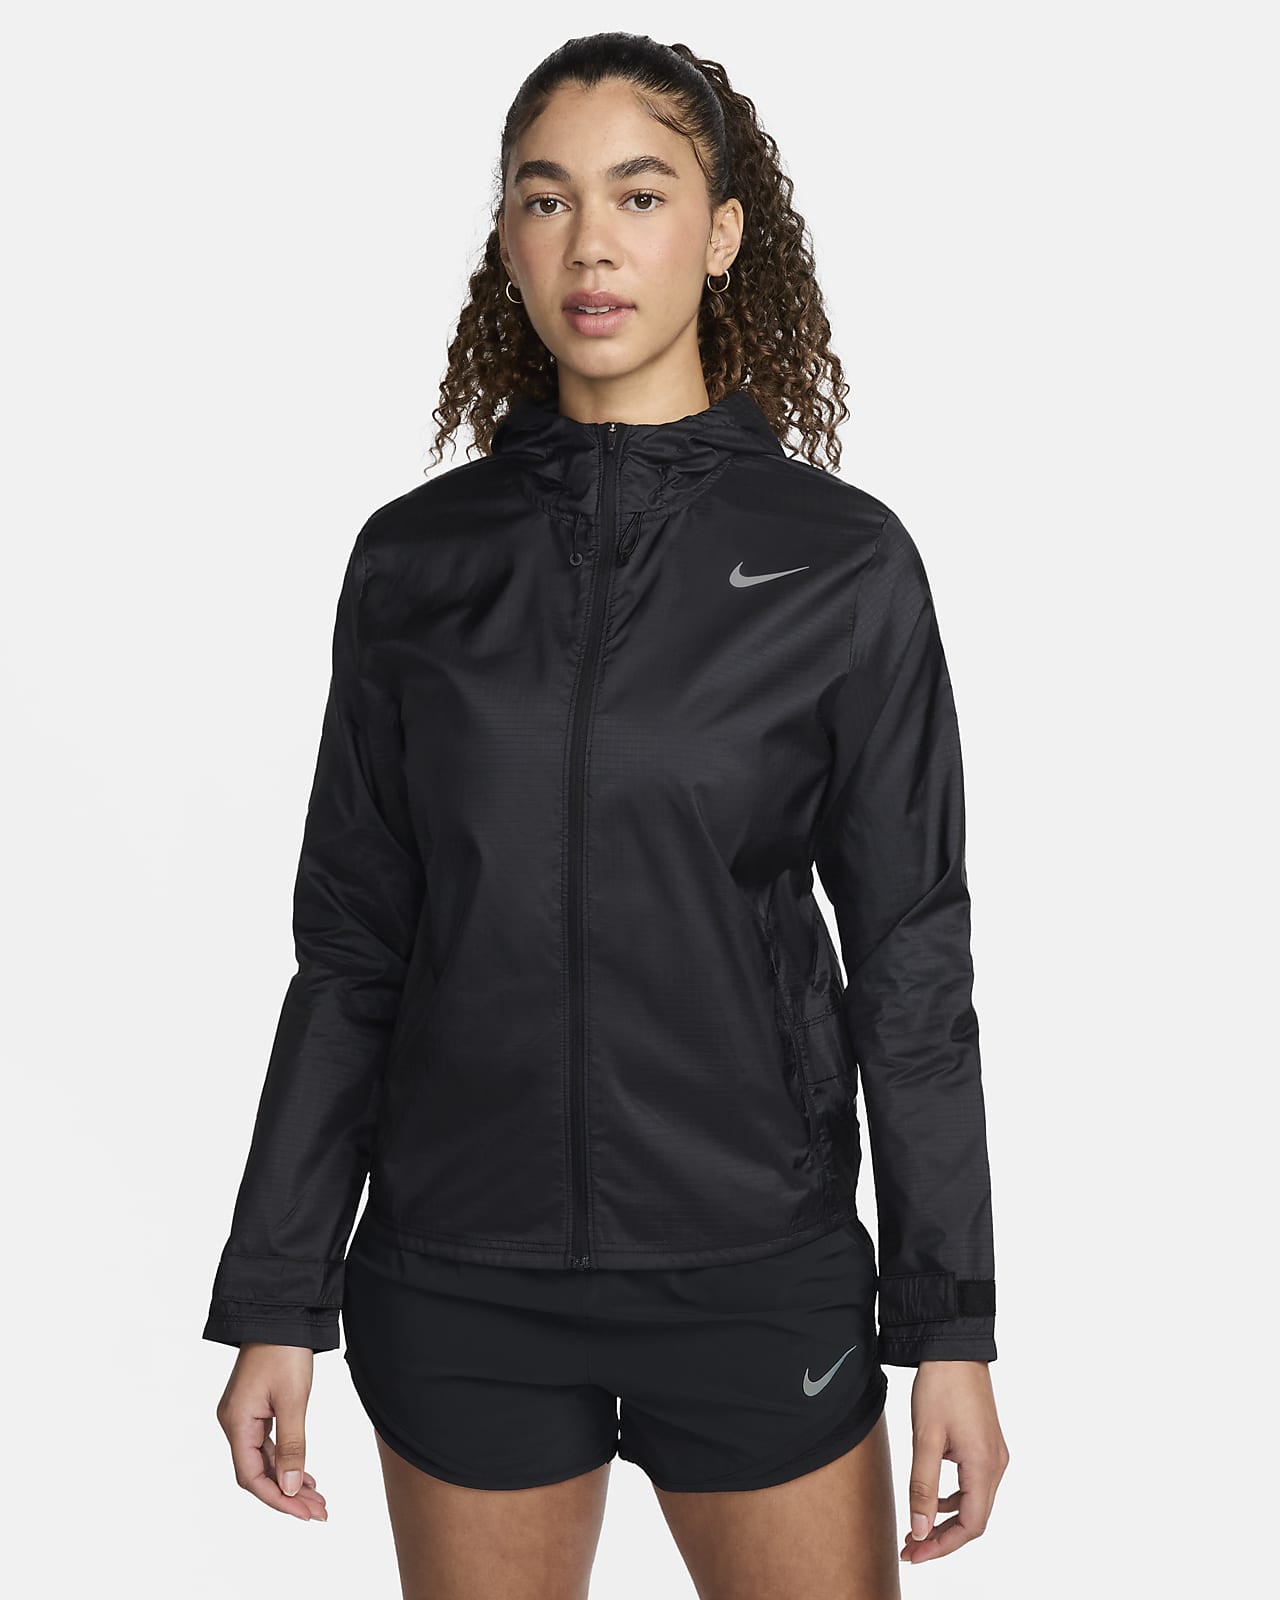 Chaqueta de running Nike Essential - Mujer